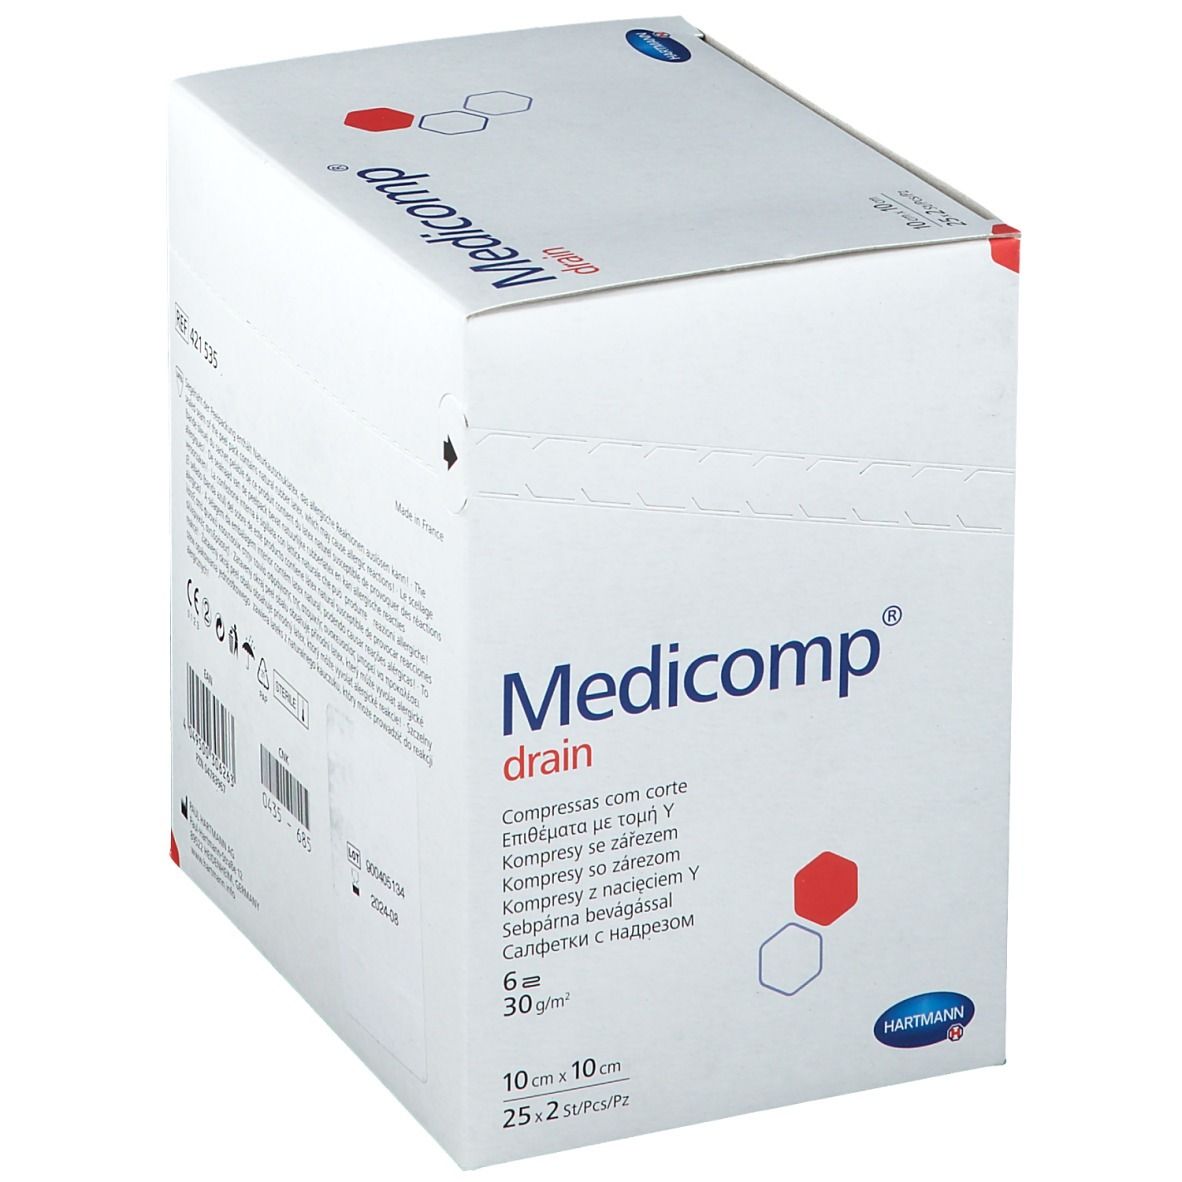 Hartmann Medicomp Drain Sterile Compres 6 Layers 10 x 10cm 421535